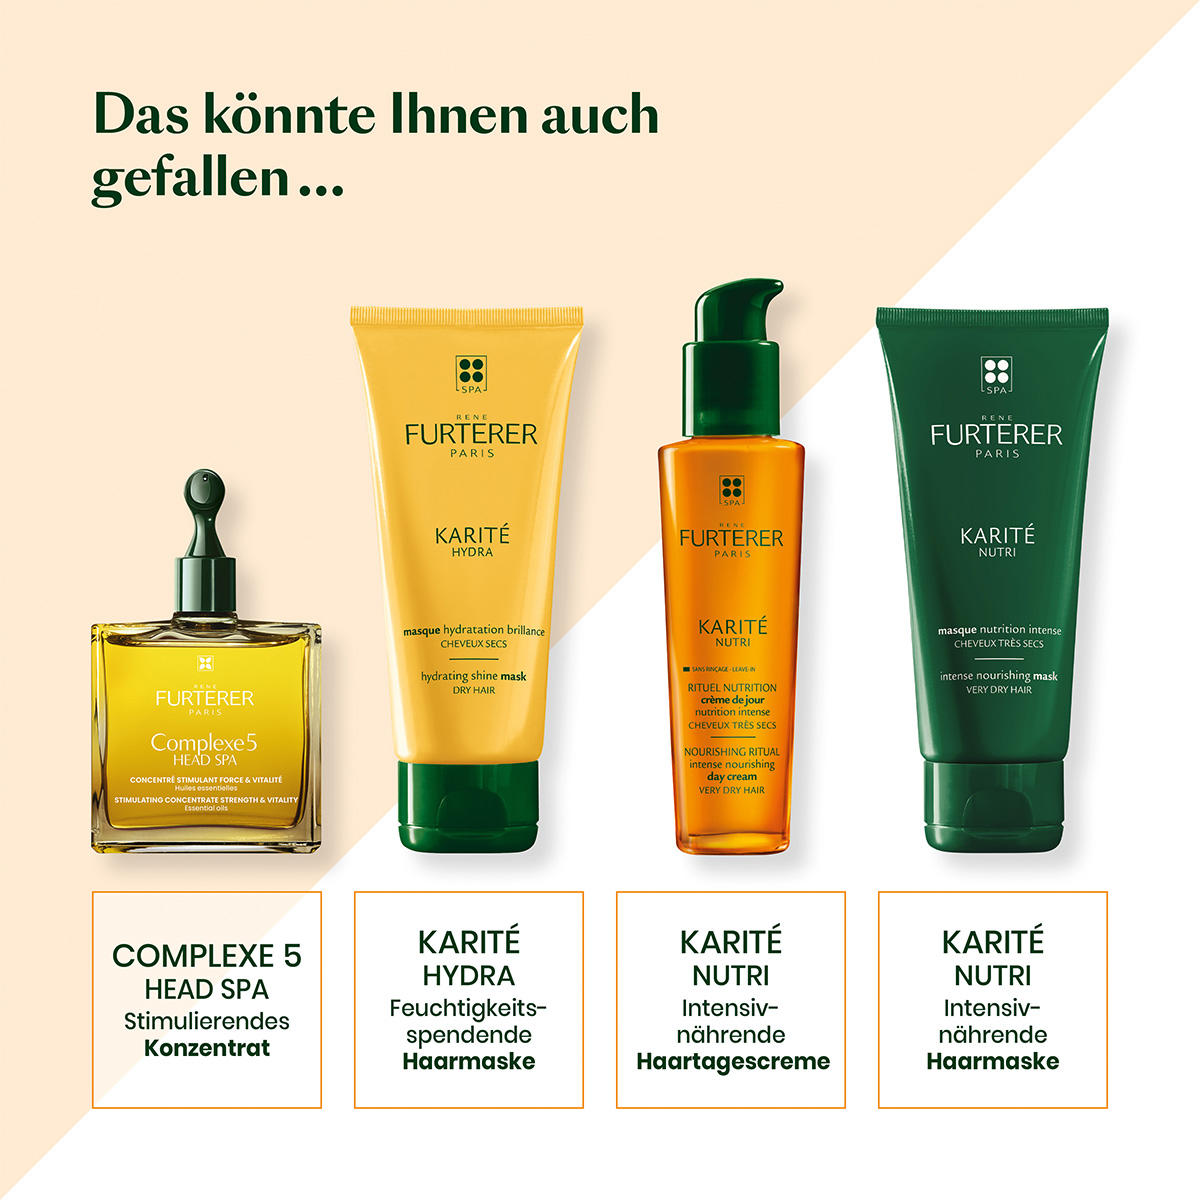 René Furterer Karité Nutri Intensiv-nährendes Shampoo 150 ml - 5